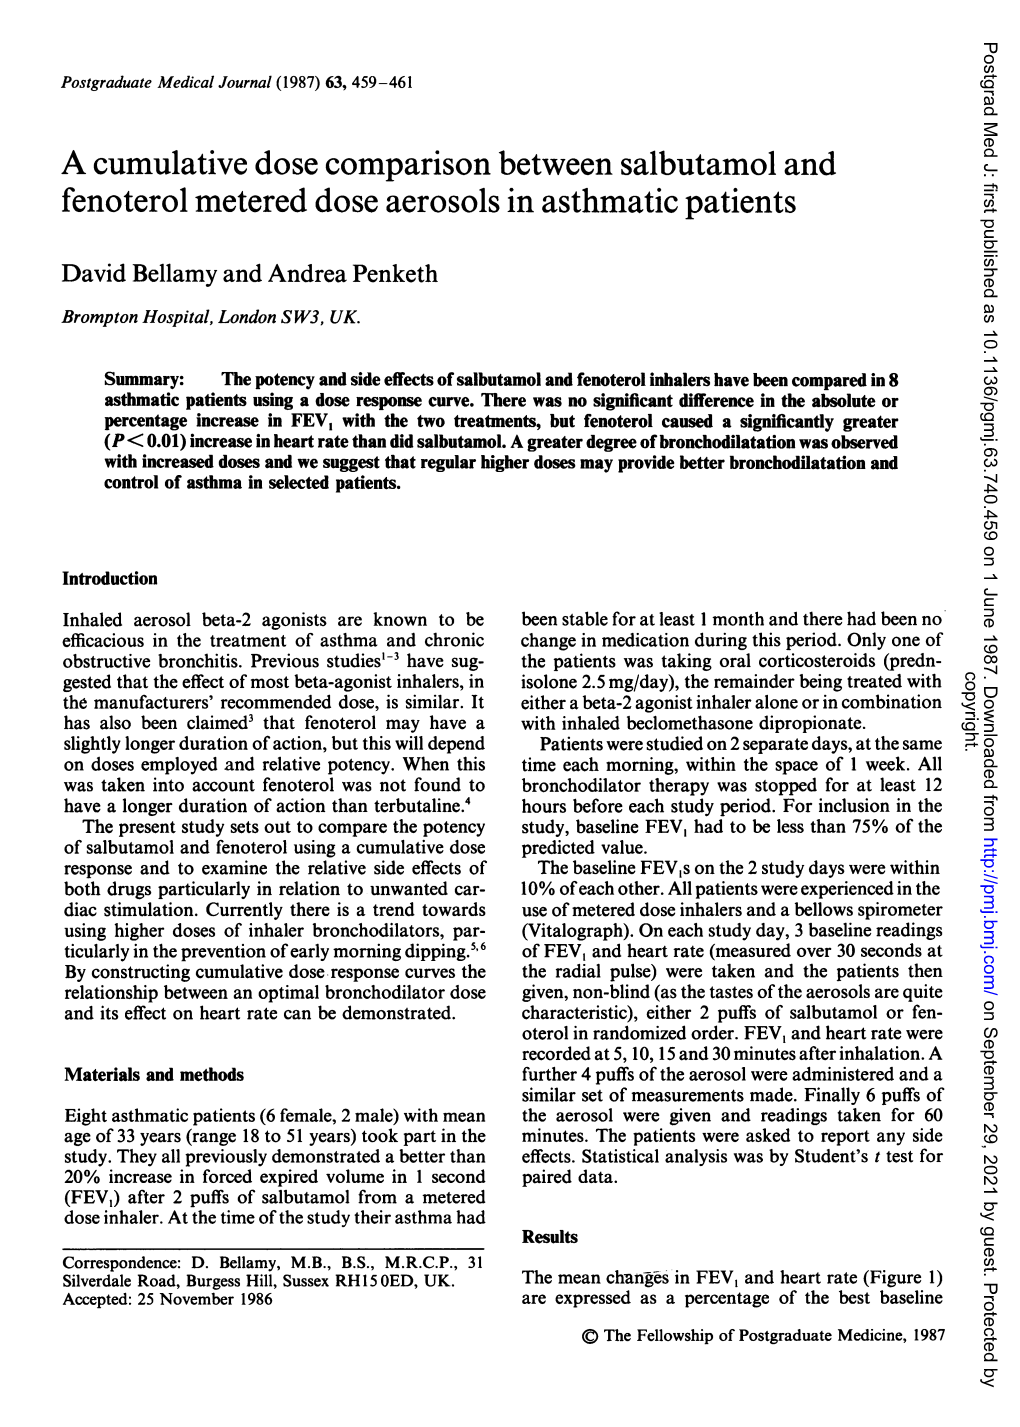 A Cumulative Dose Comparison Between Salbutamol and Fenoterol Metered Dose Aerosols in Asthmatic Patients